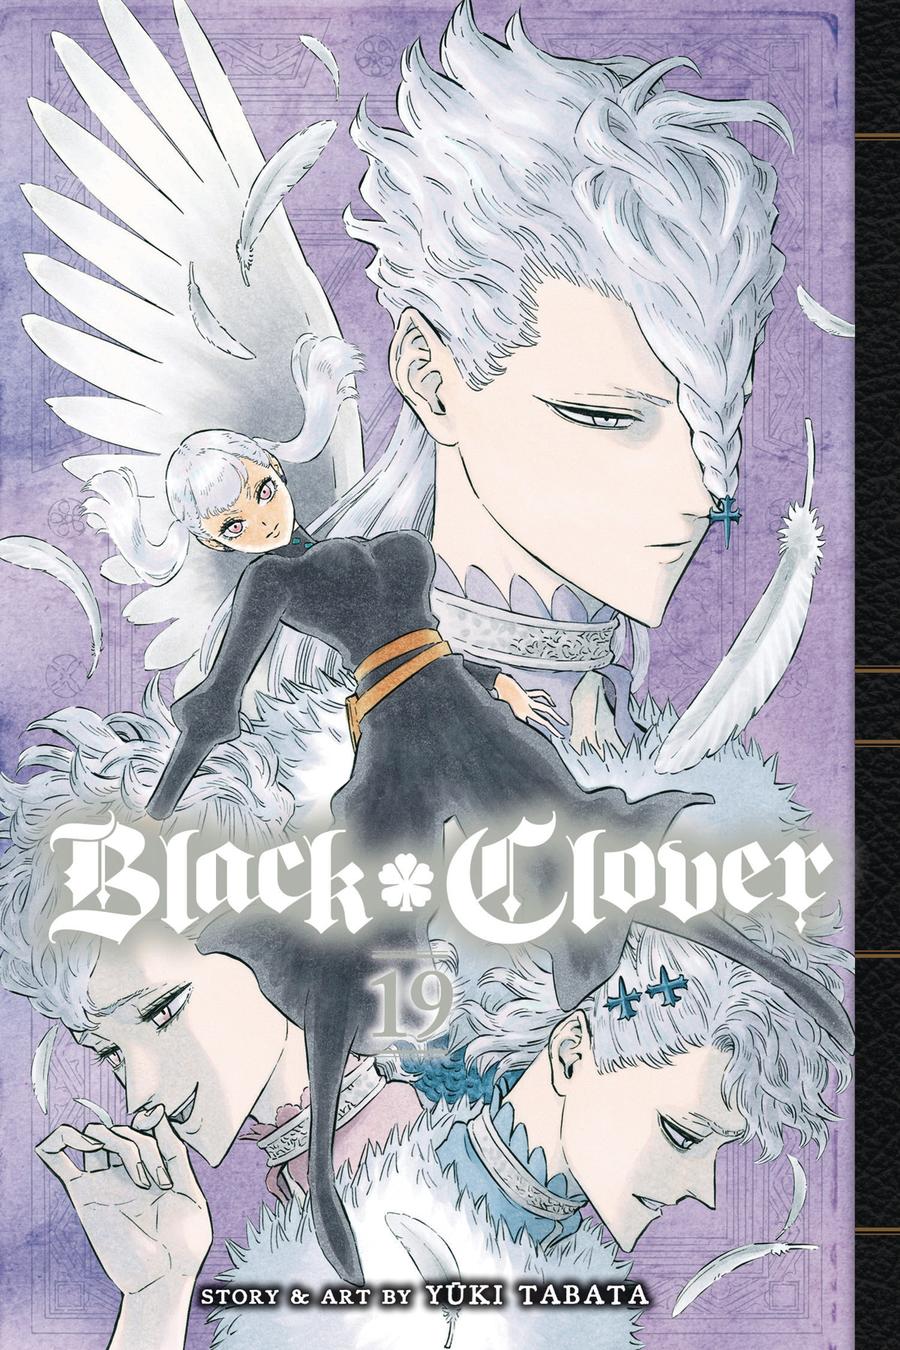 Black Clover Vol 19 GN